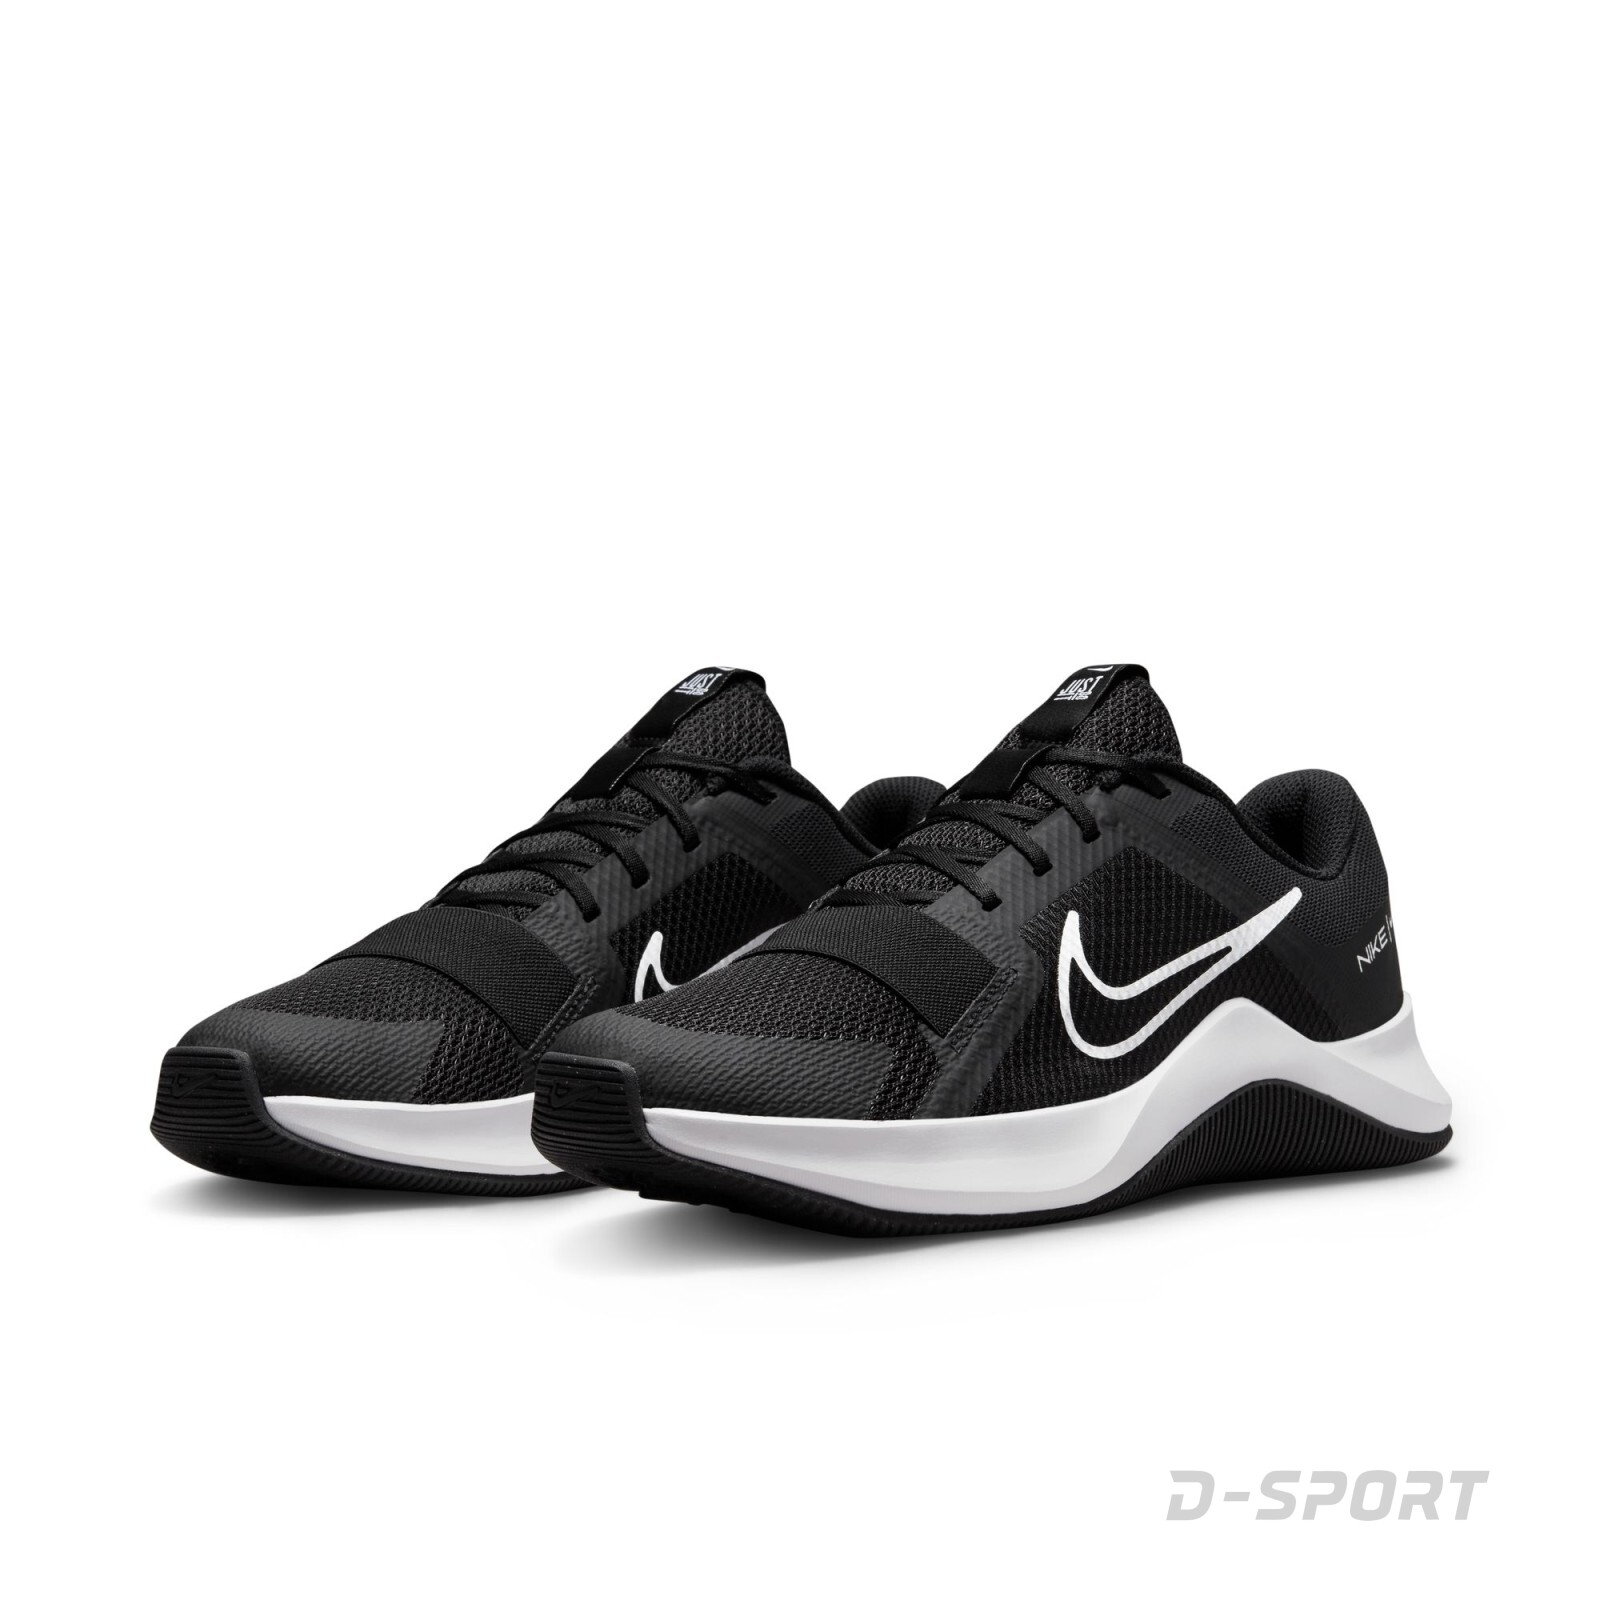 Nike MC Trainer 2